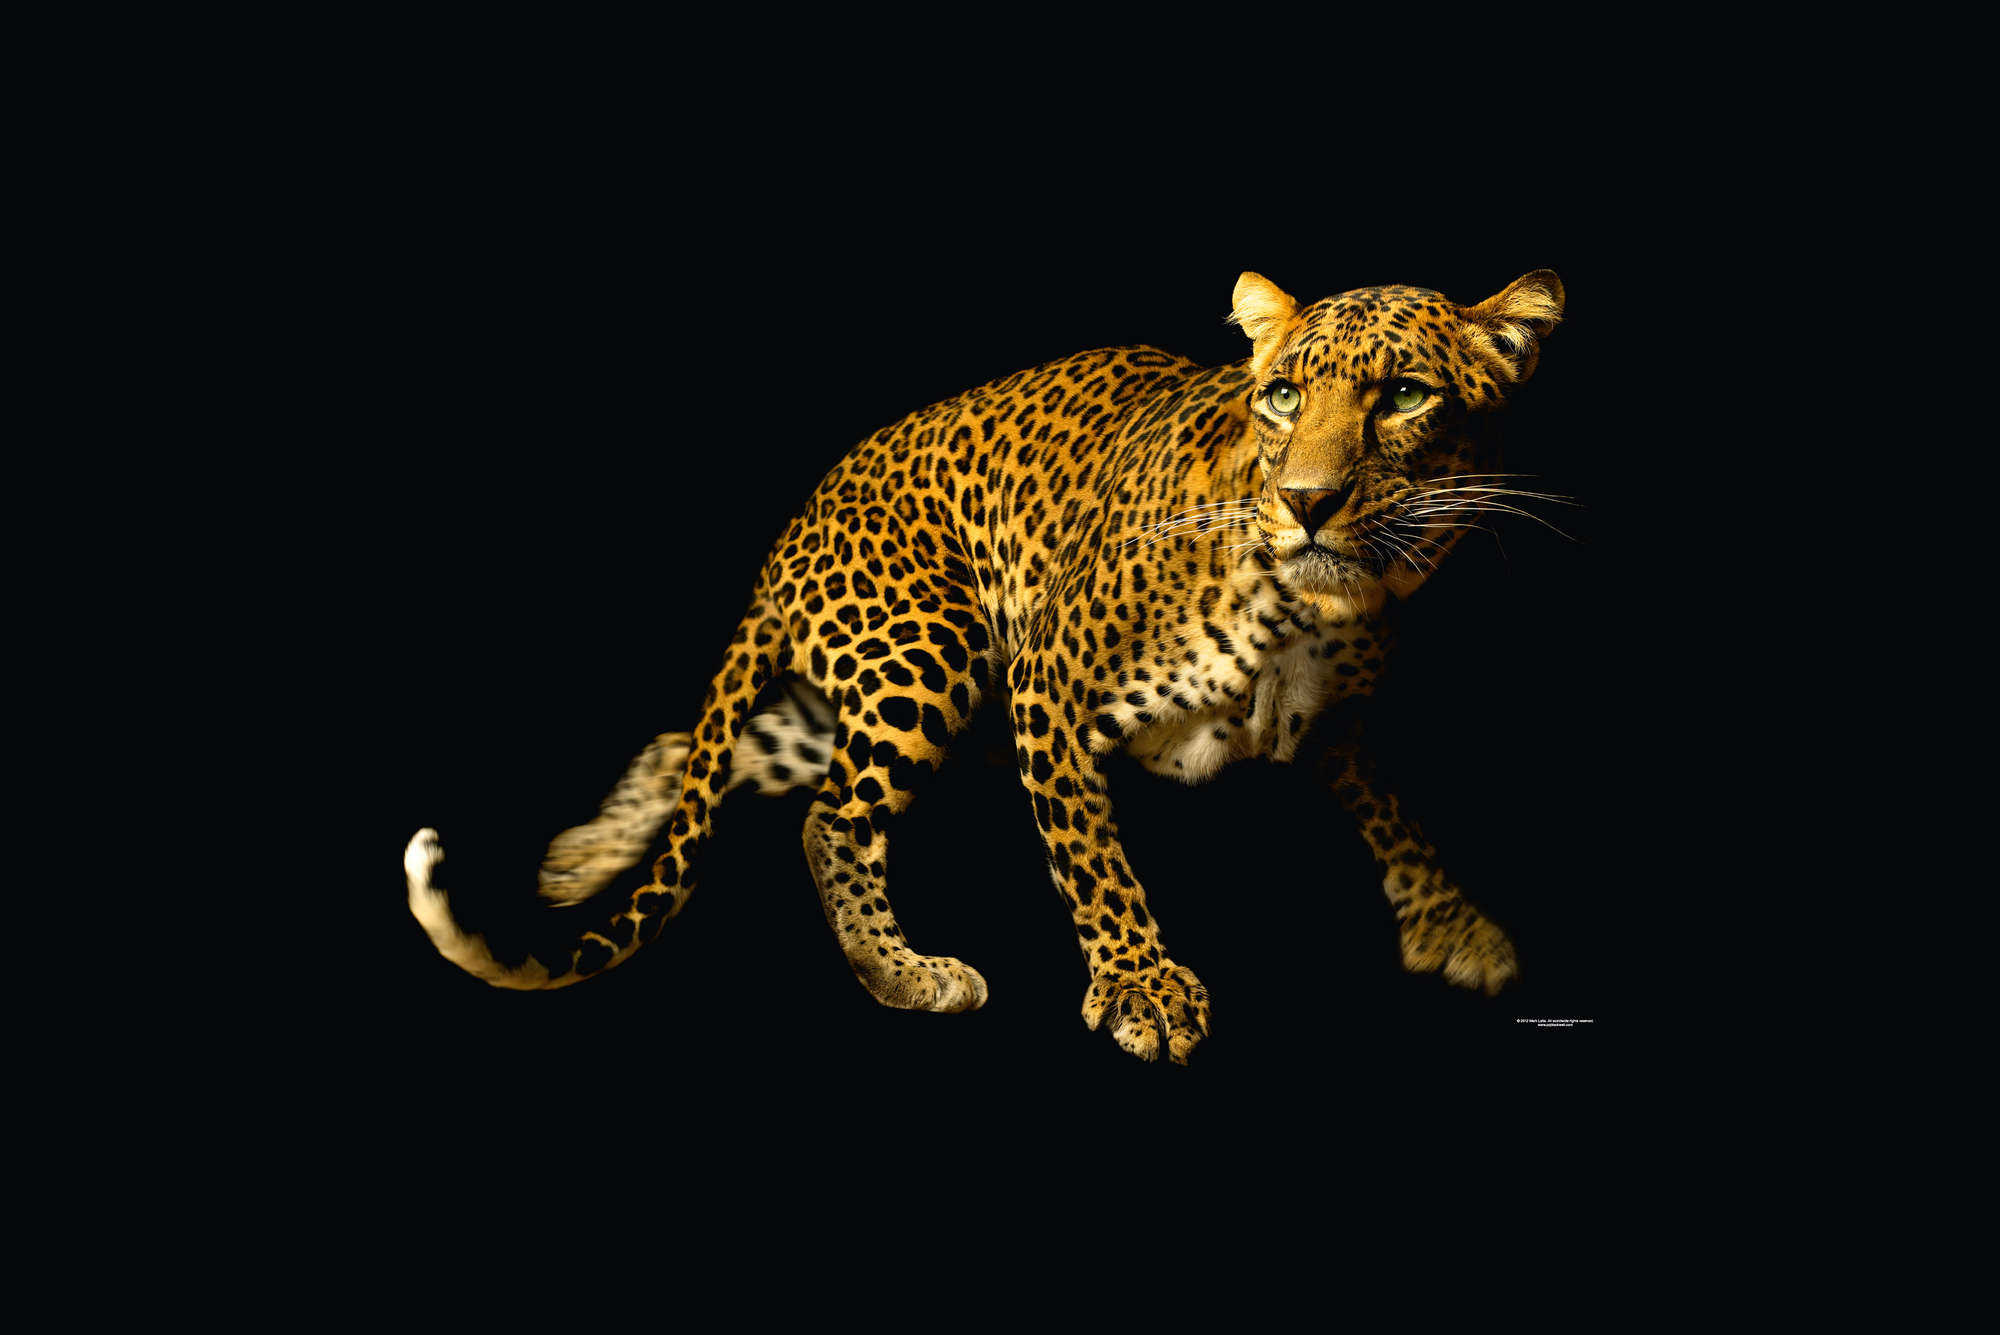             Leopard - animal portrait mural
        